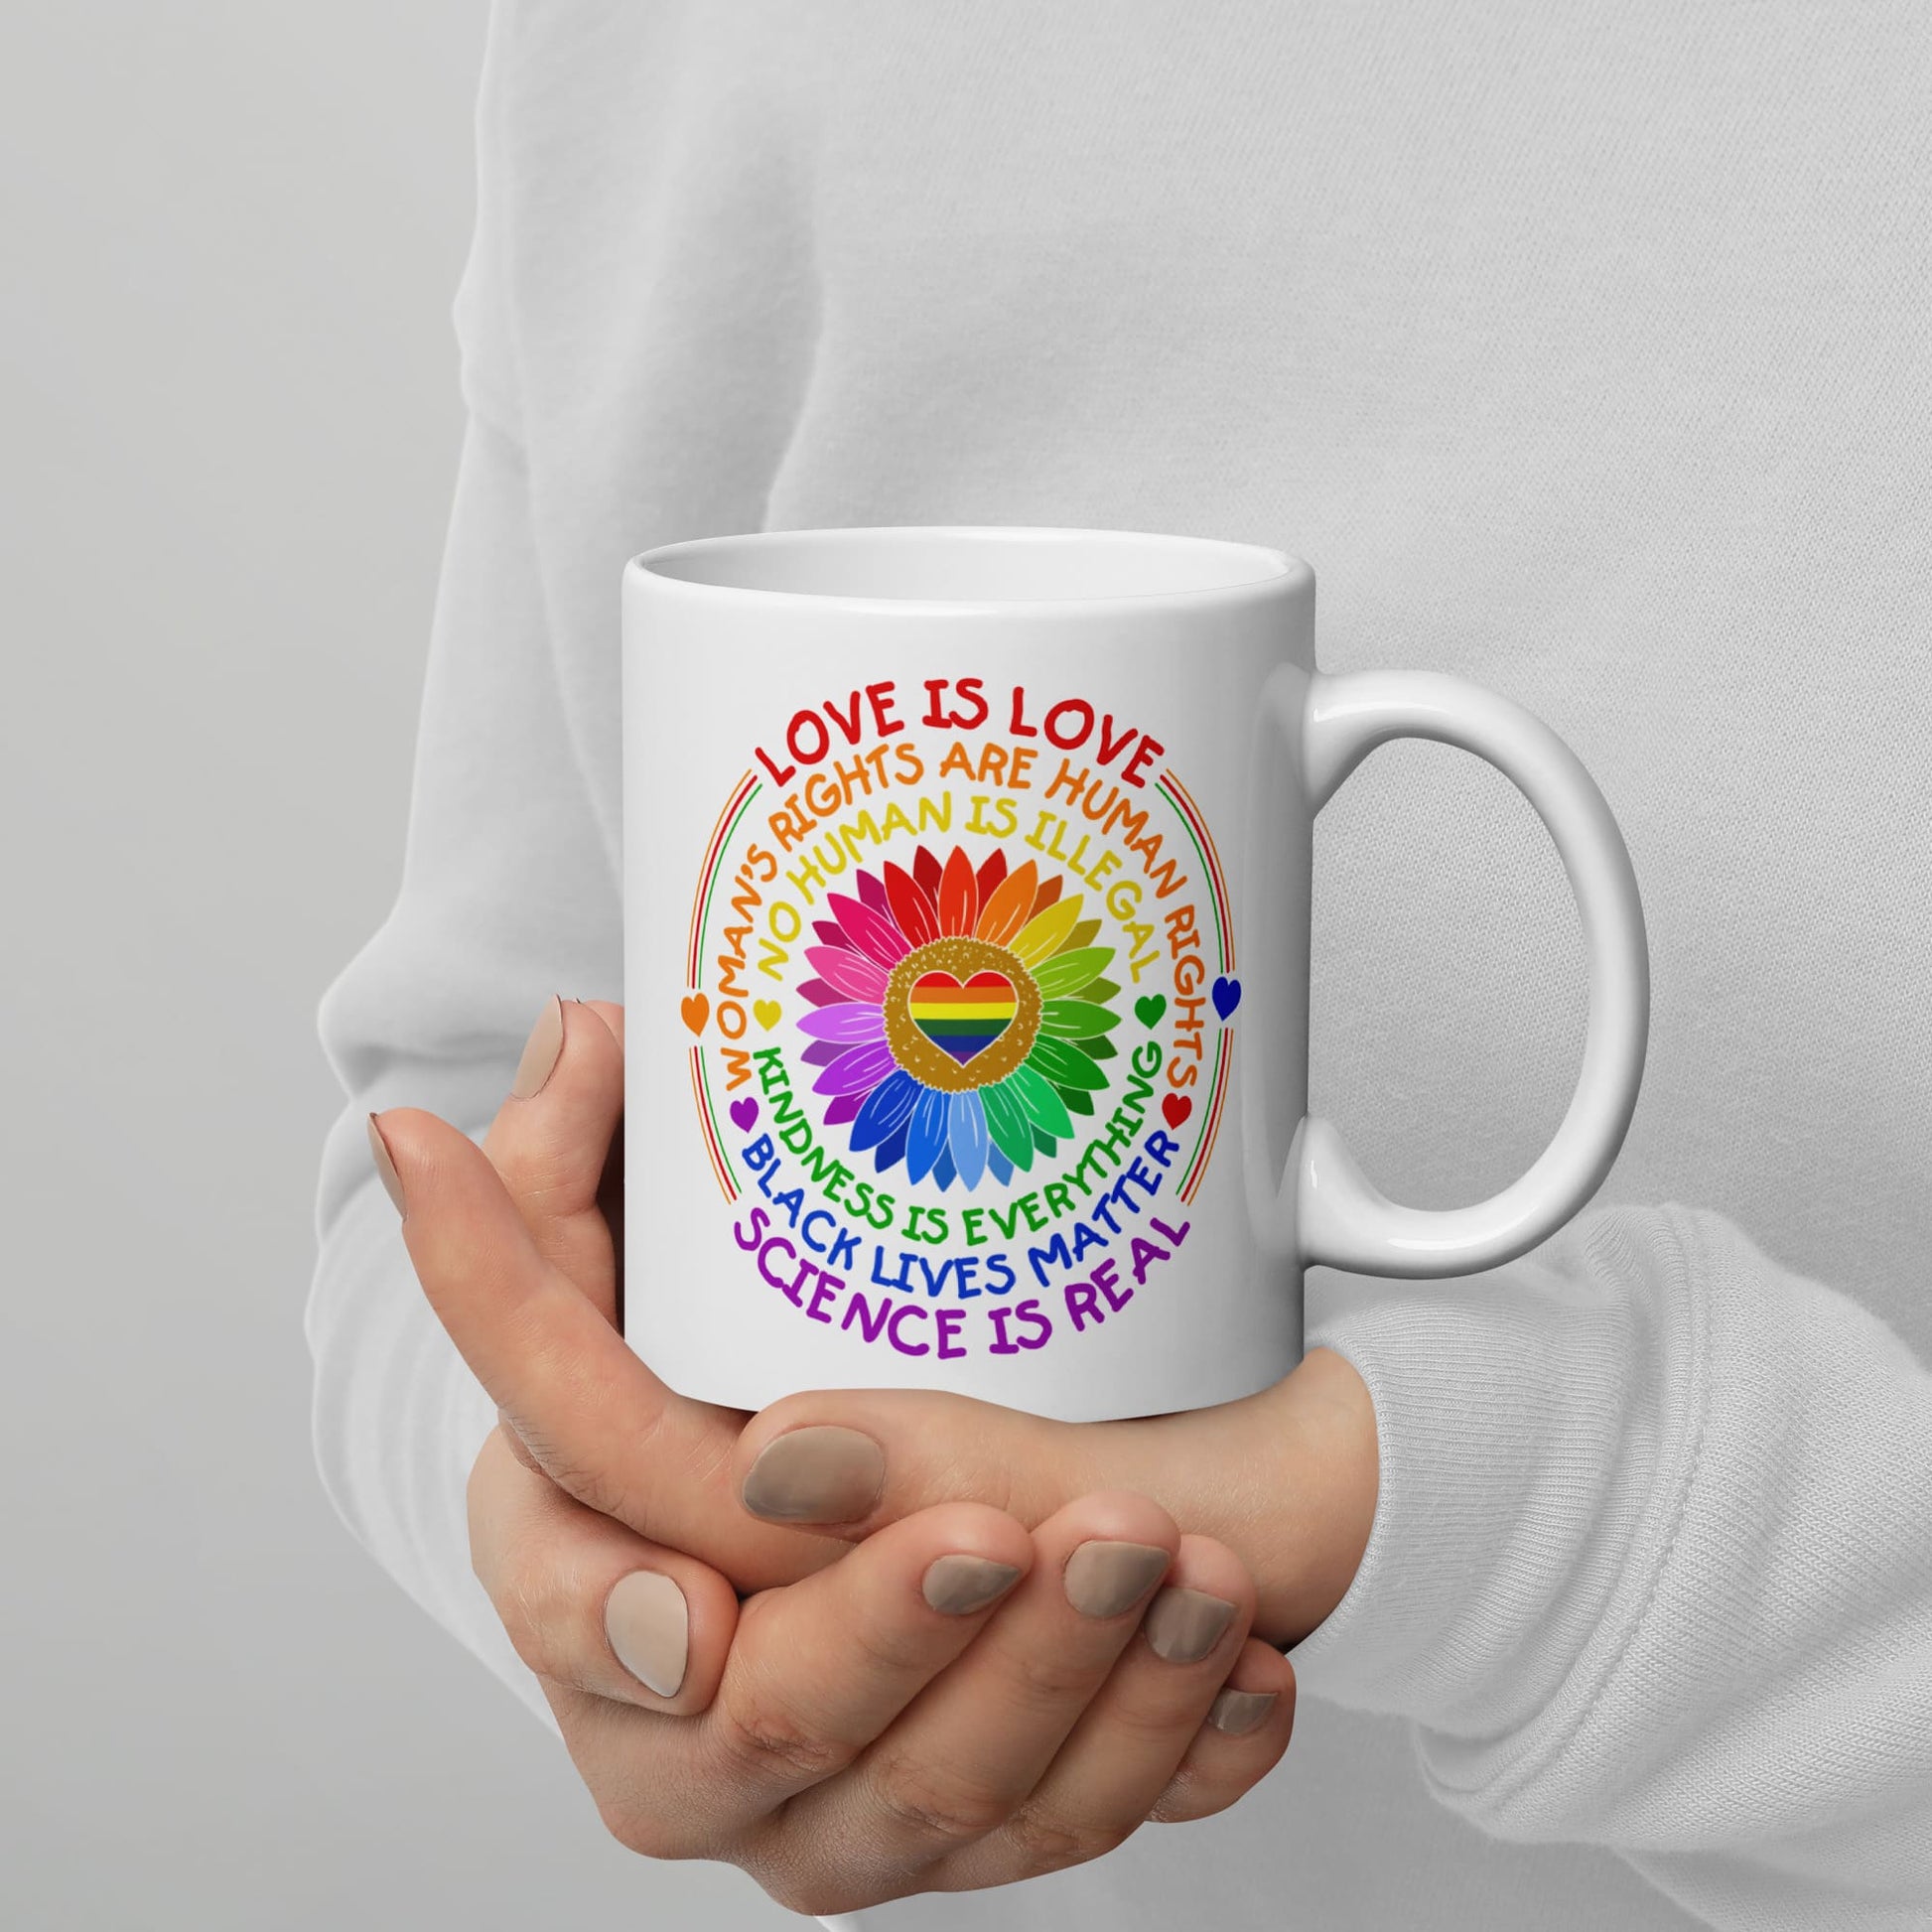 LGBTQ pride mug, human rights coffee or tea cup on hands